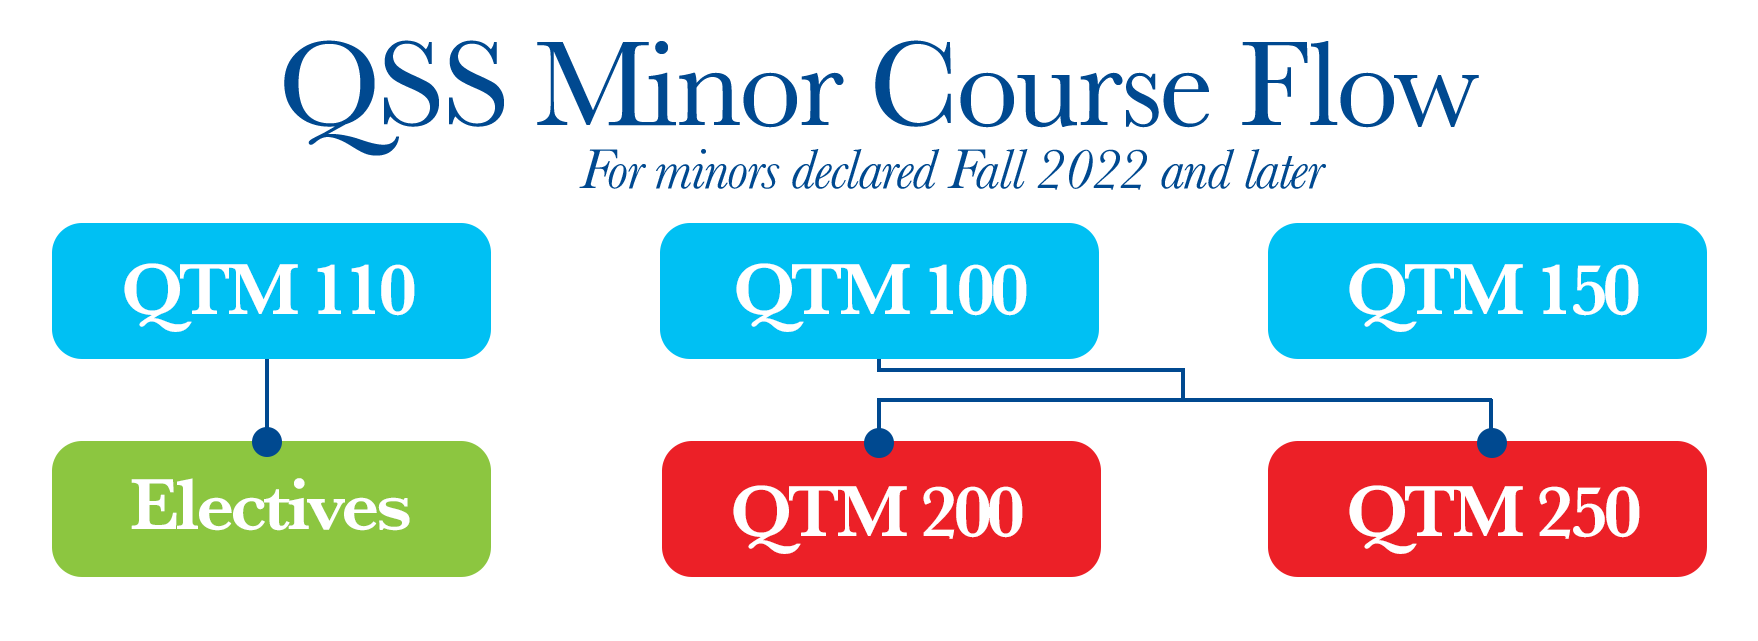 QSS-minor-course-flowchart-2022-10-07.png